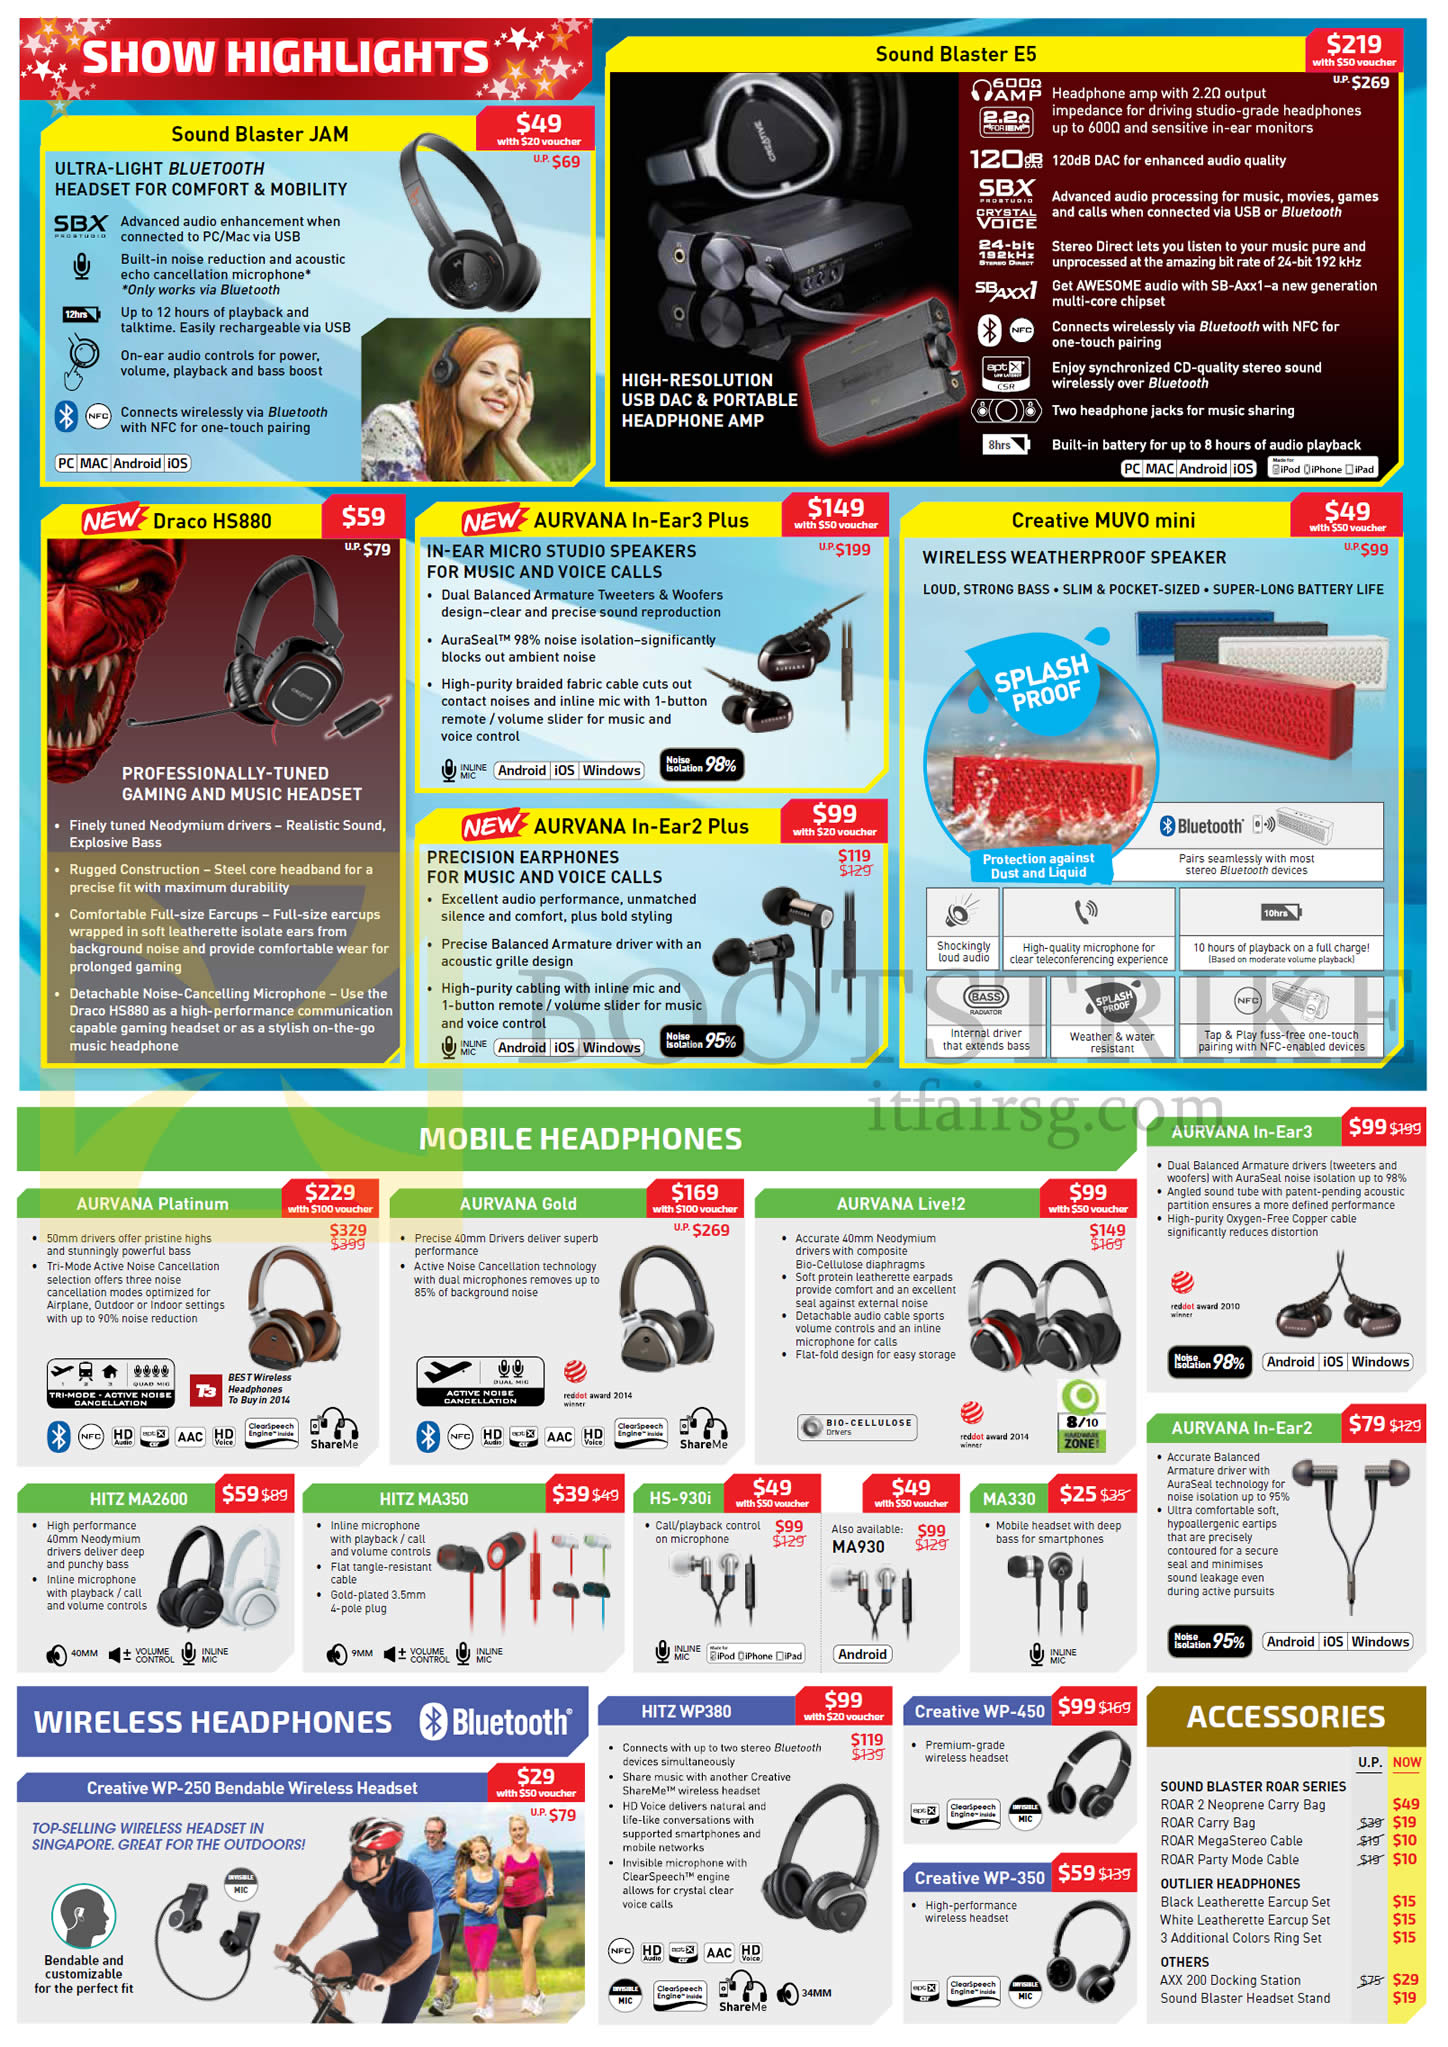 PC SHOW 2015 price list image brochure of Creative Jam, Mobile Headphones, Headphones, Accessories, Aurvana In-Ear 3 Plus, 2 Plus, Platinum, Gold, Live 2, WP-450, WP-350, Draco HS880, Muvo Mini, Hitz